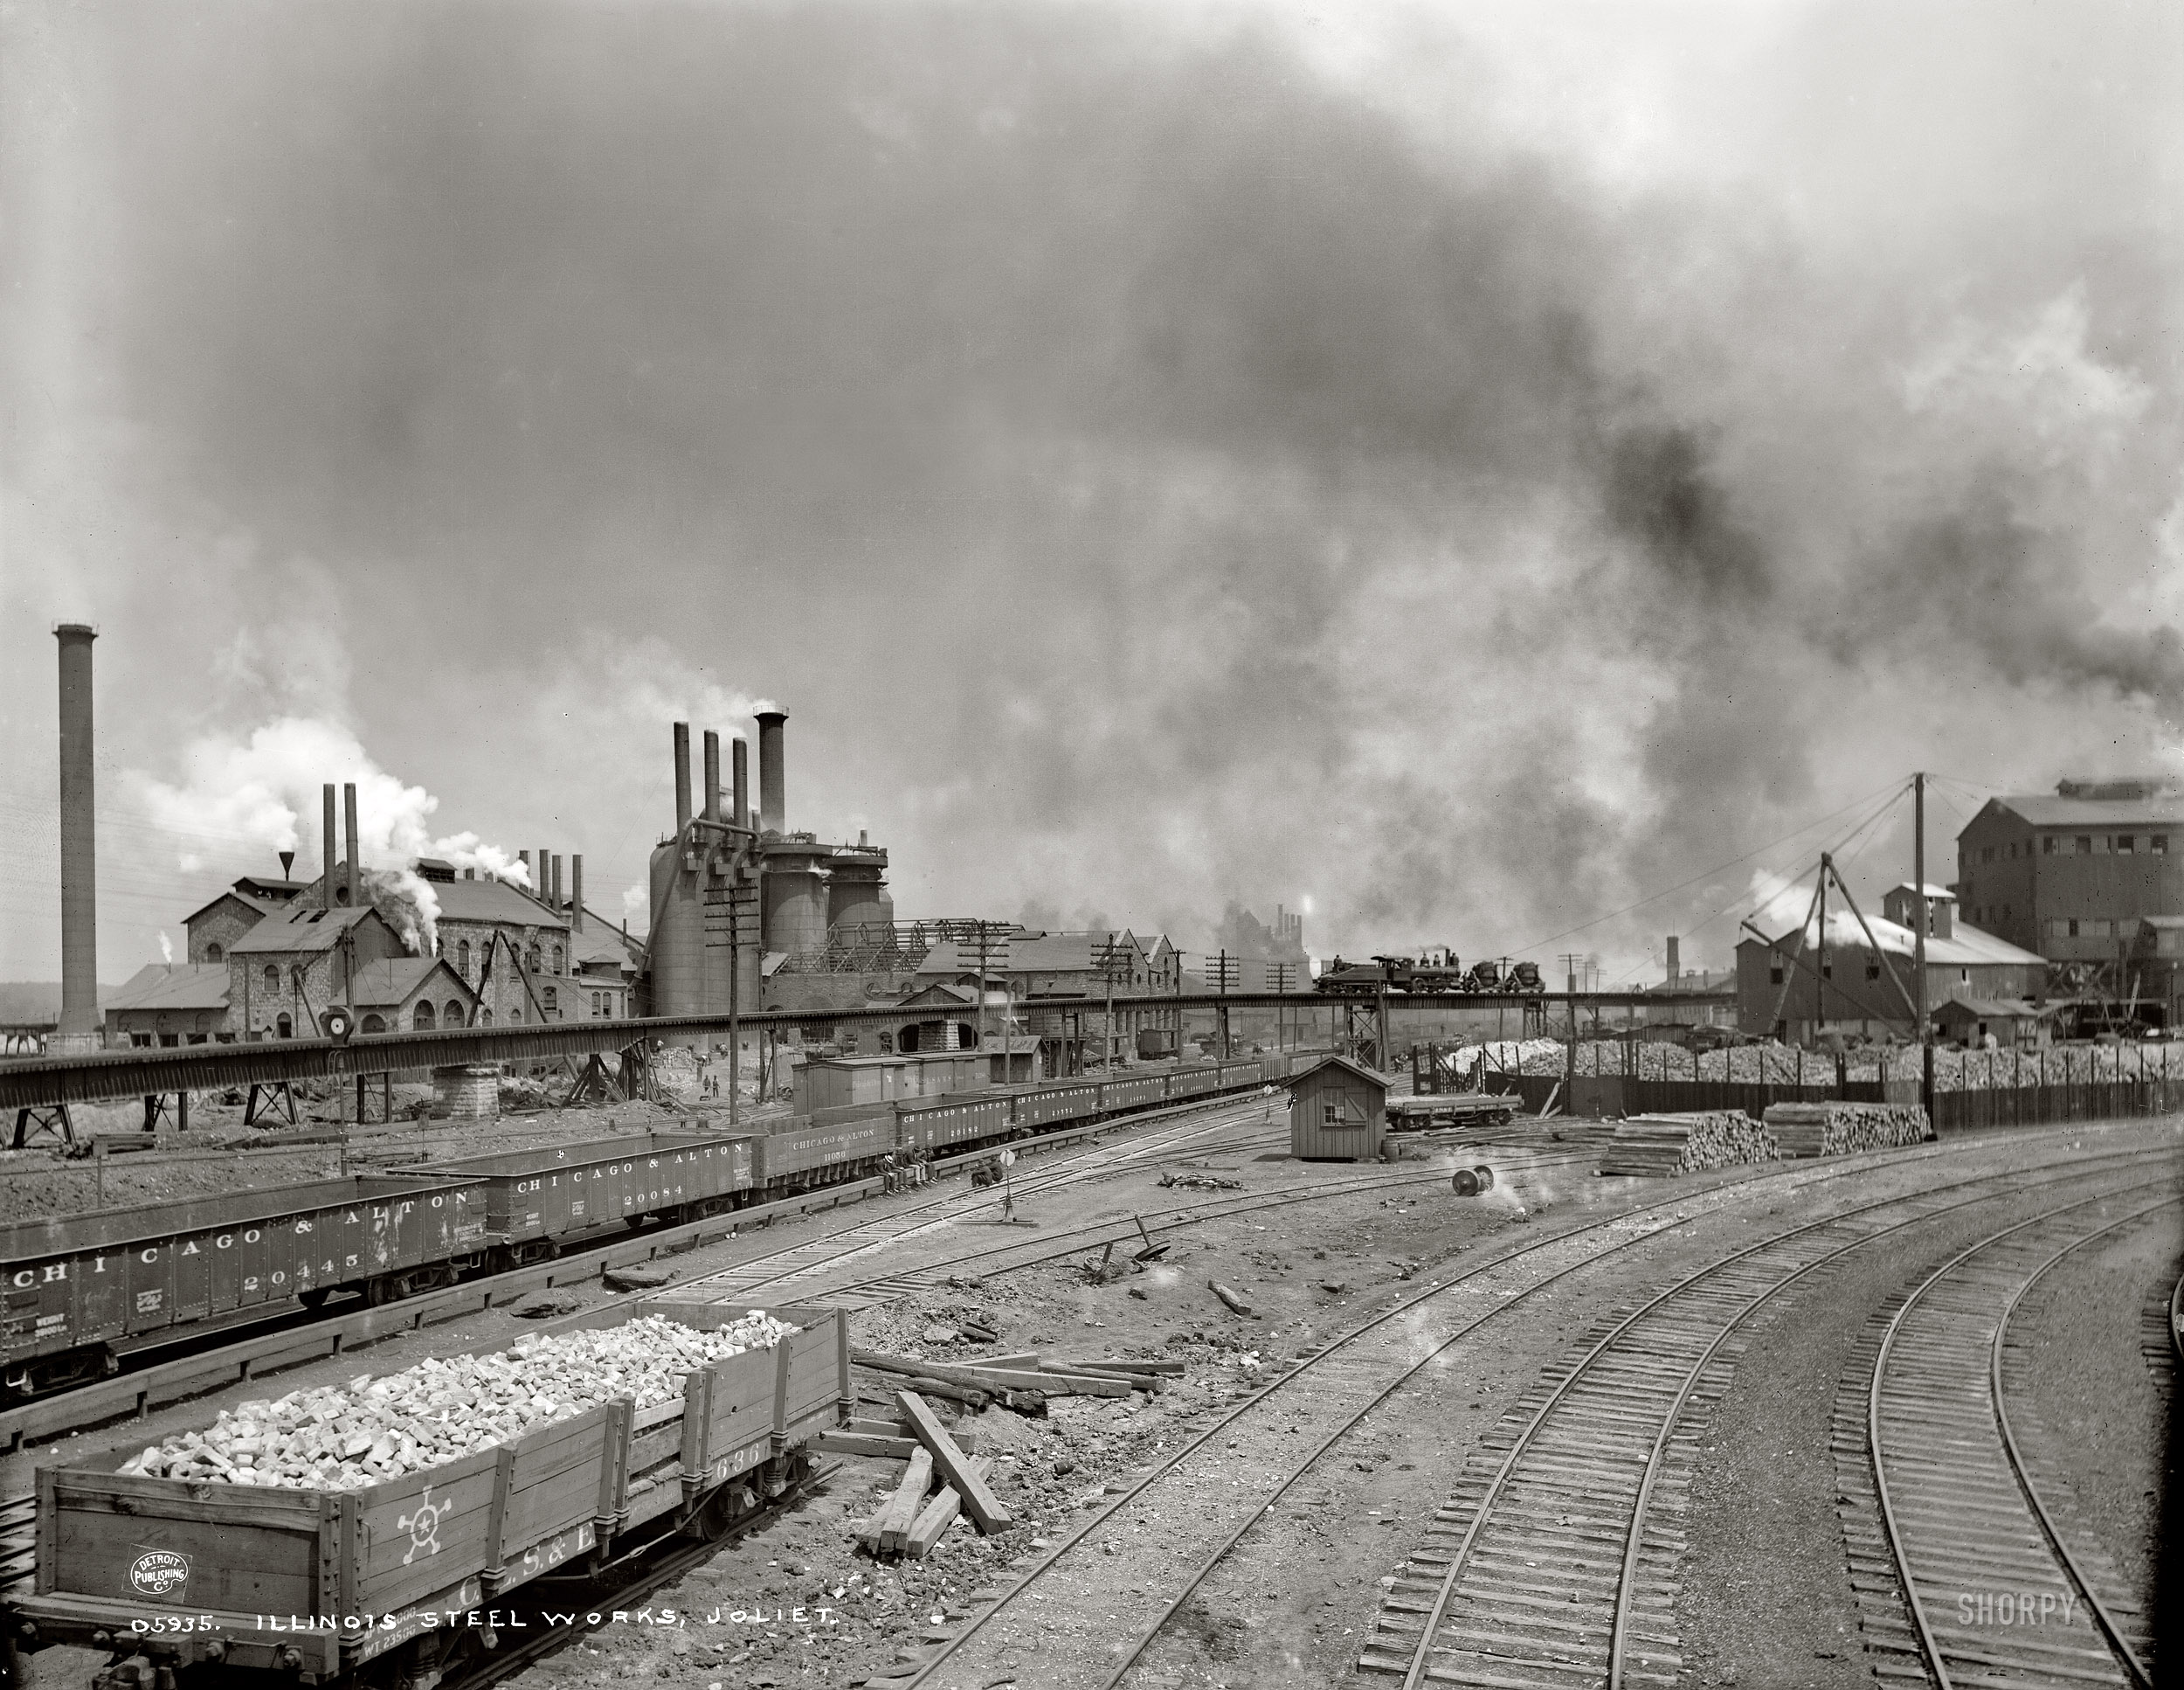 Circa 1900. "Illinois Steel Works, Joliet." Detroit Publishing Co. View full size.